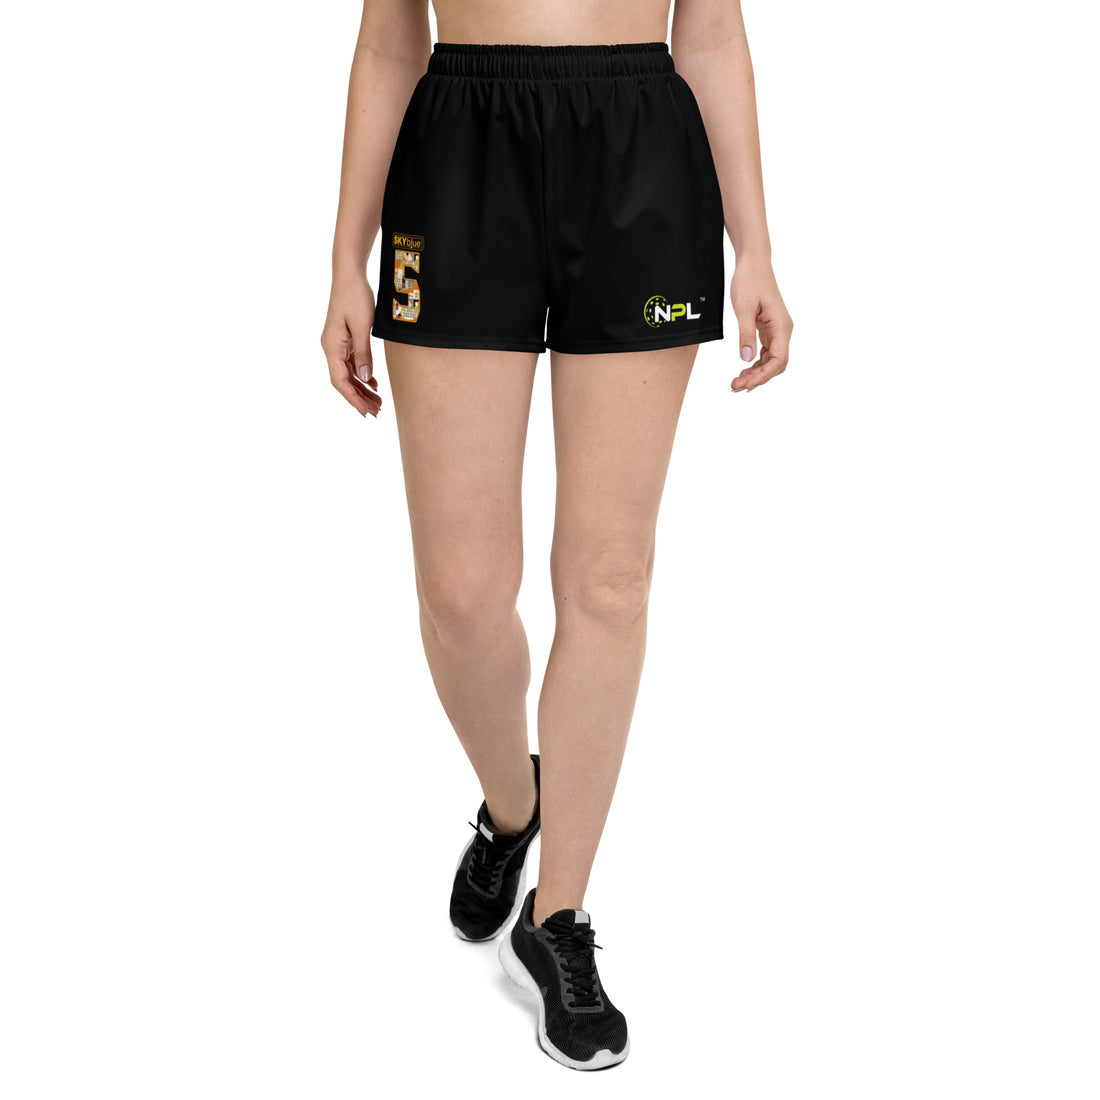 Stacy Potter 5 Austin Ignite™ SKYblue™ 2023 Authentic Women's Shorts - Black